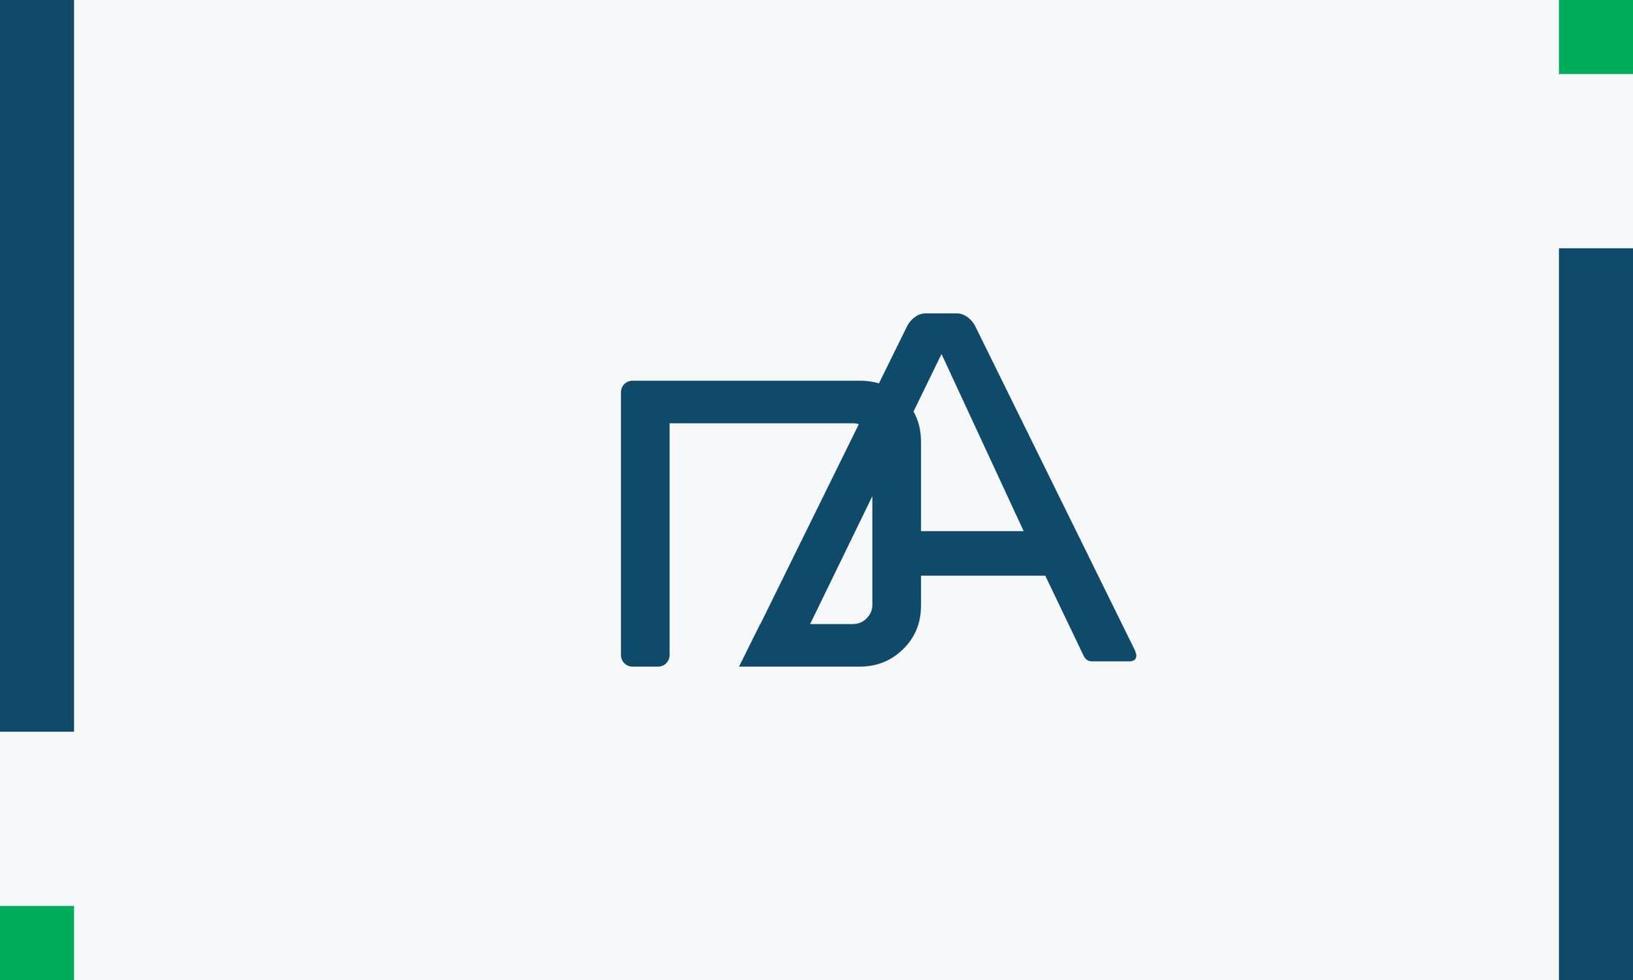 alfabet letters initialen monogram logo da, ad, d en a vector